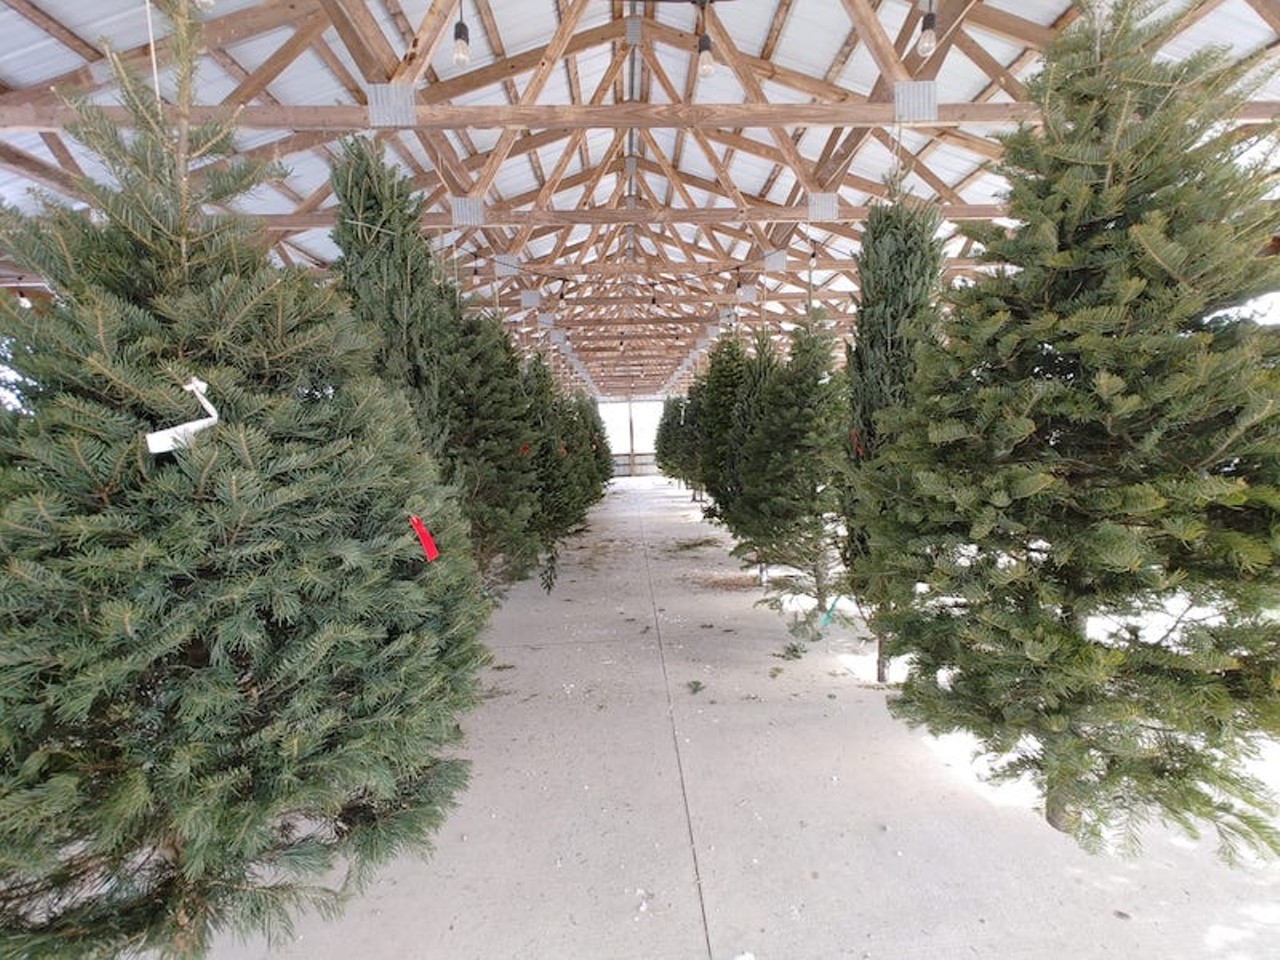 Broadview Christmas Tree Farm
4380 N. Hickory Ridge Rd., Highland; broadviewtreefarm.com